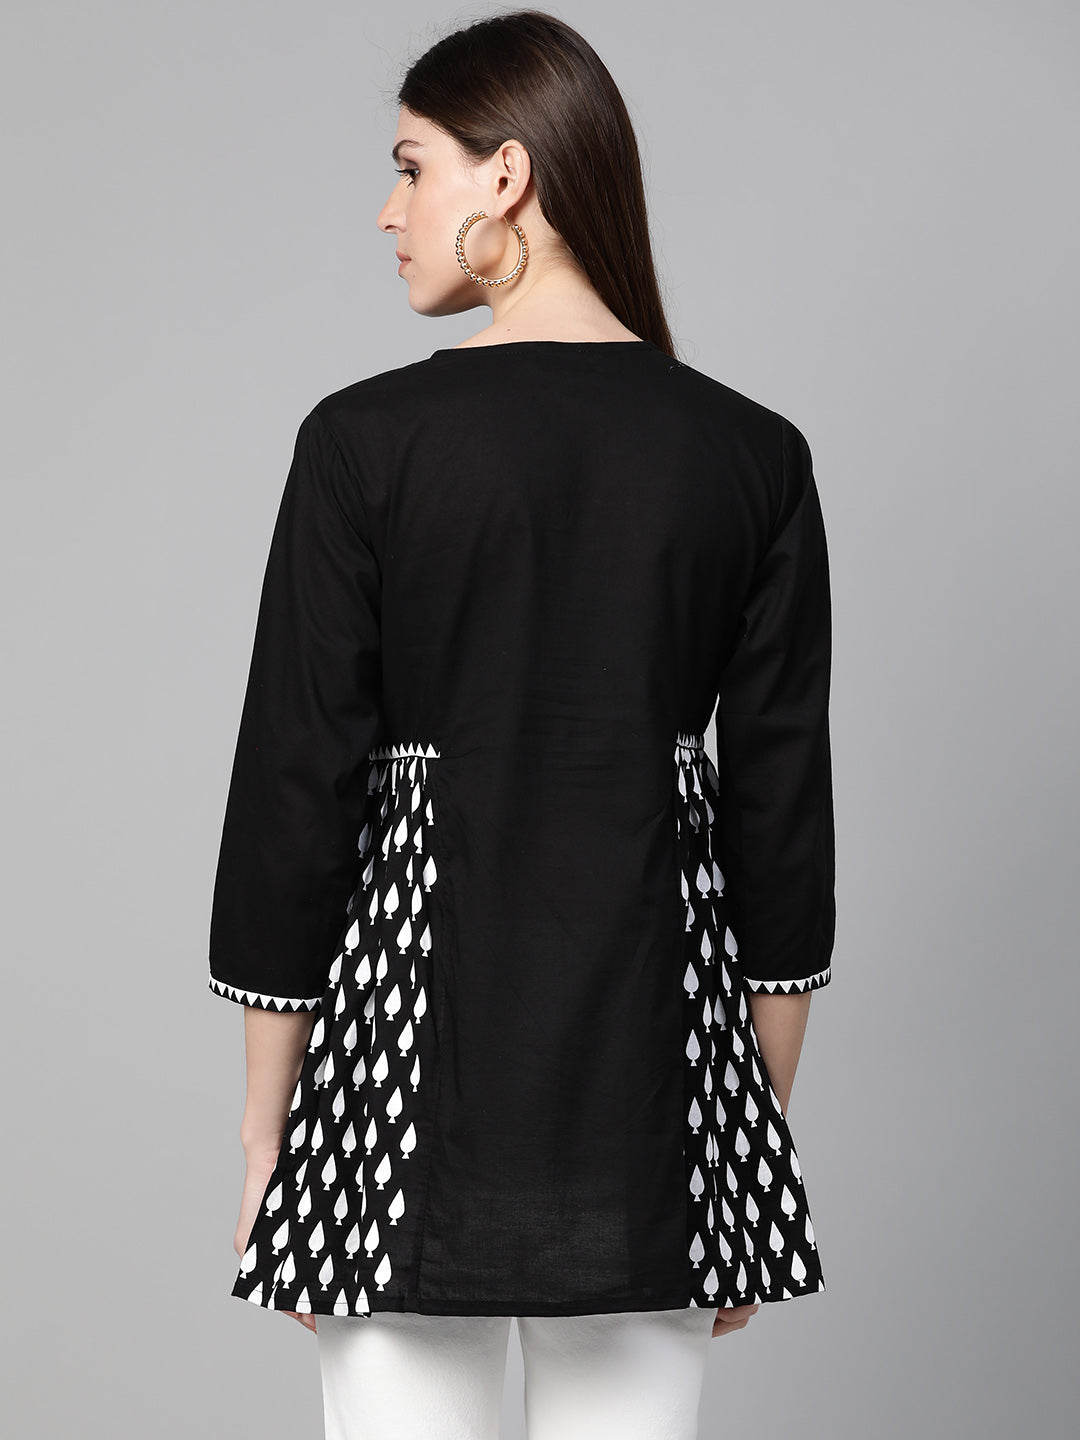 Bhama Cuture Black & White Printed Tunic